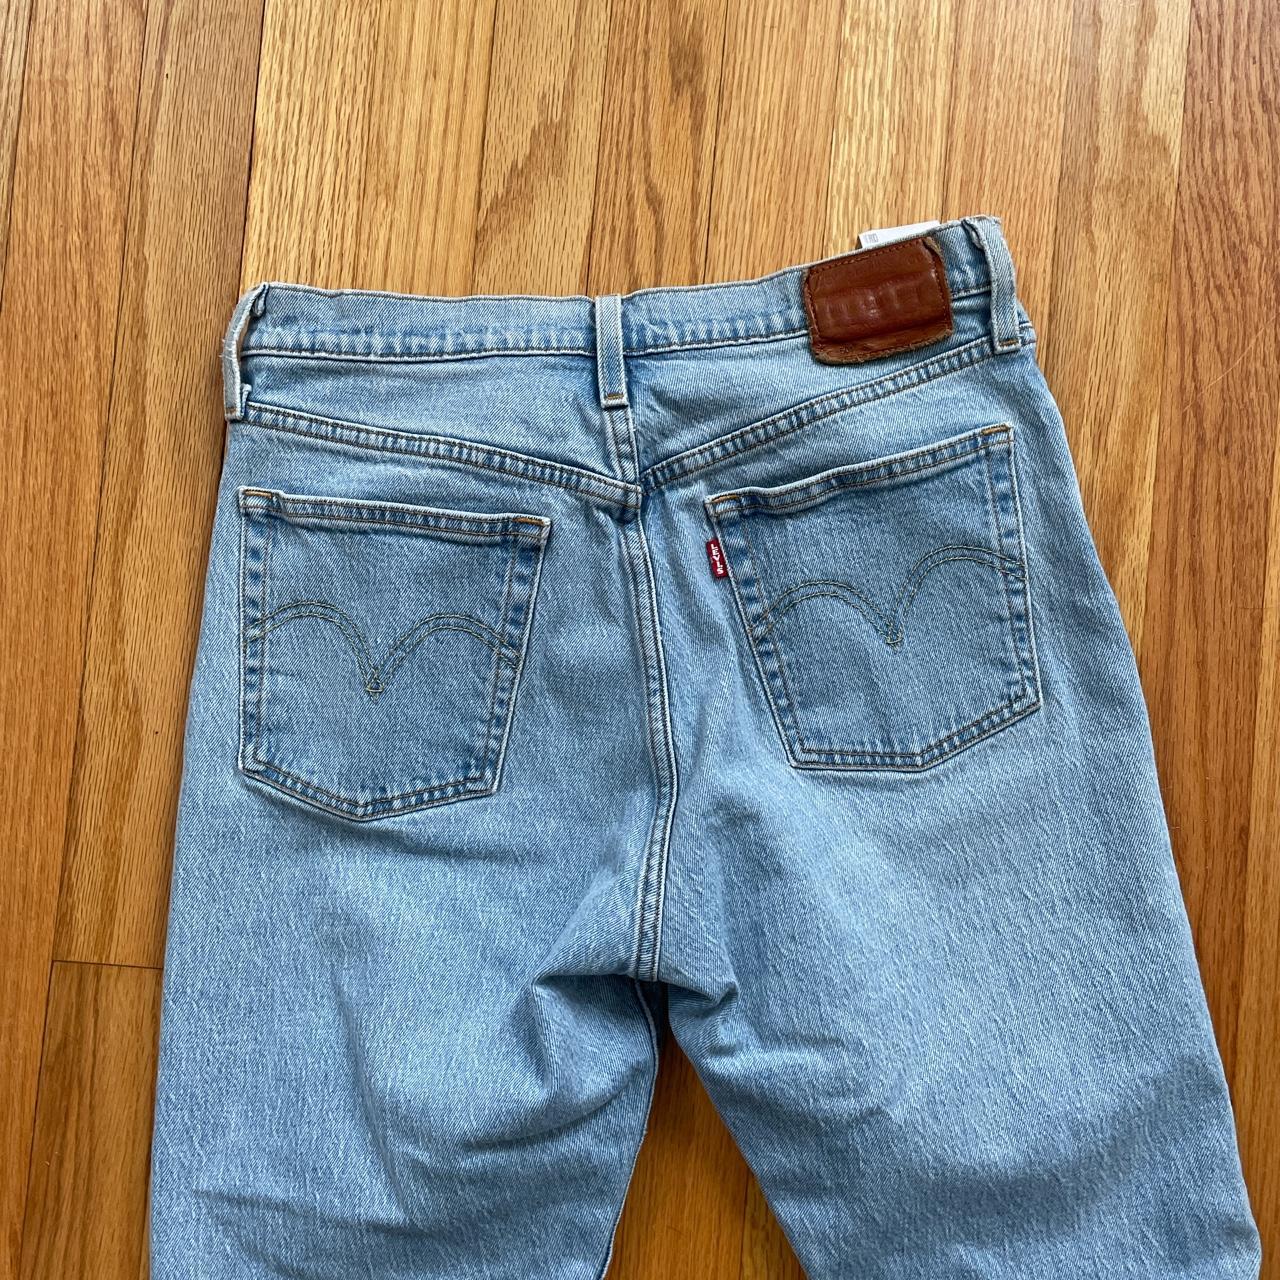 Levi’s 501S jeans, light blue wash. Purchased on... - Depop